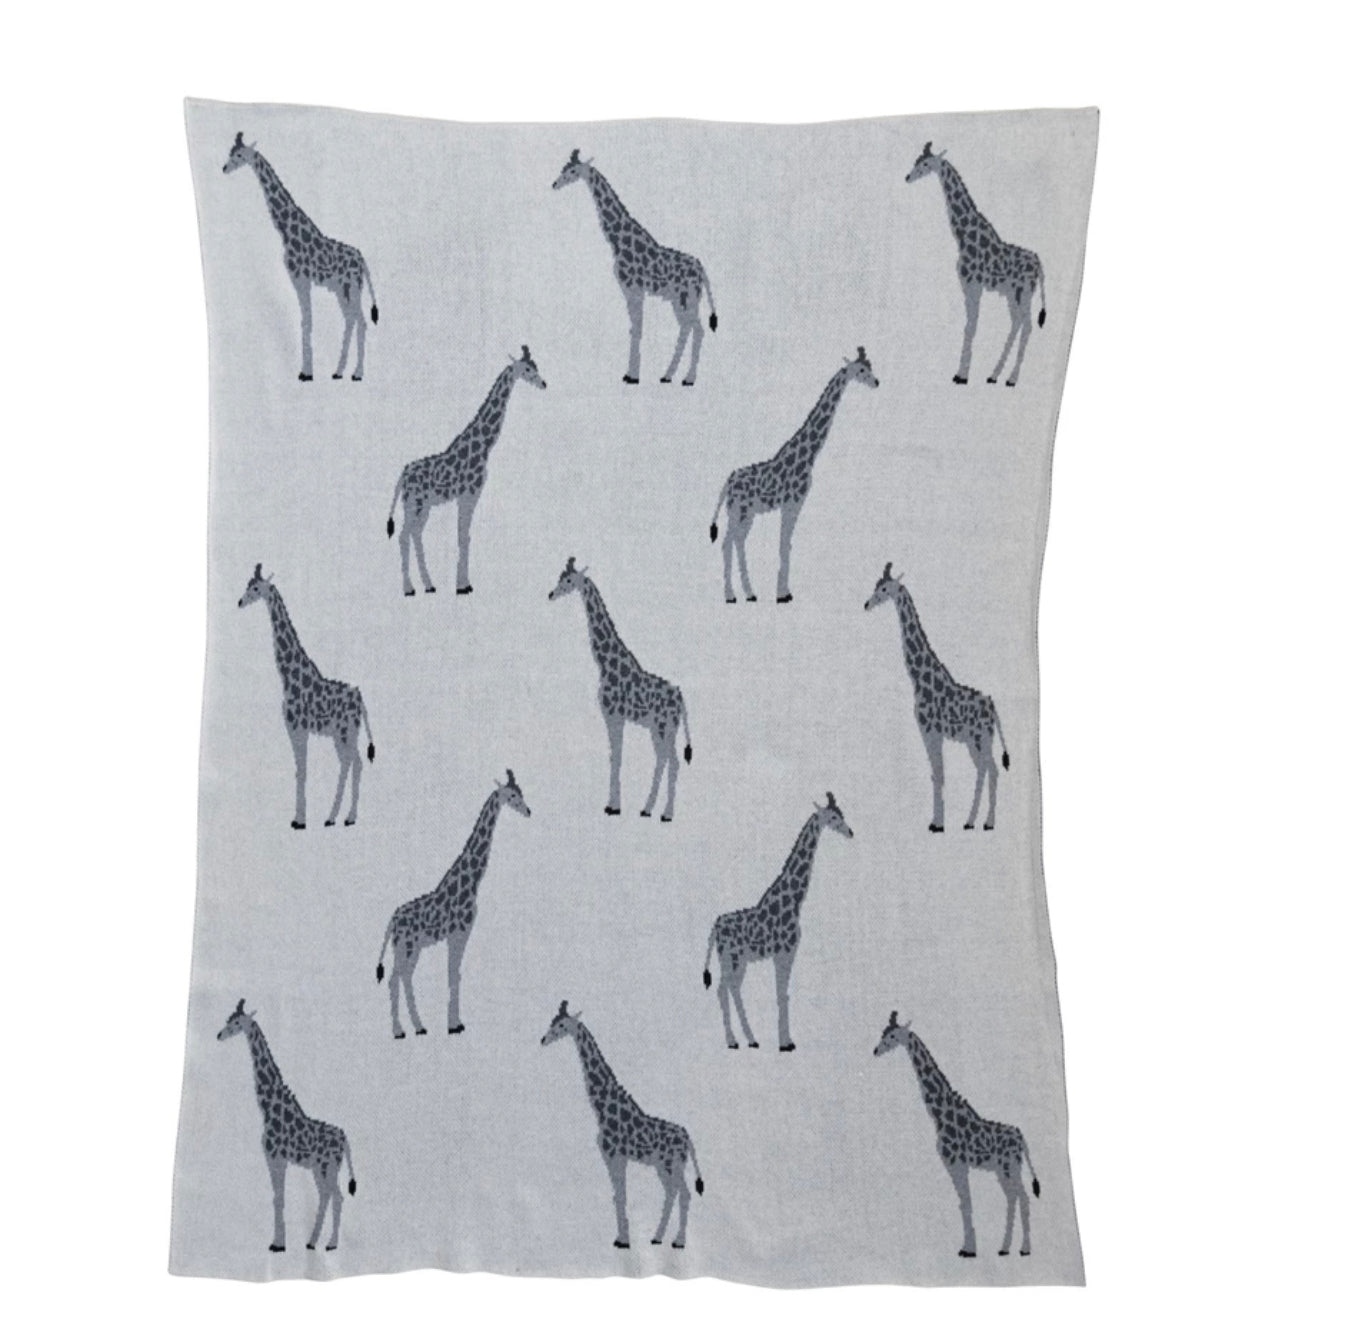 Cotton Knit Baby Blanket w/Giraffes